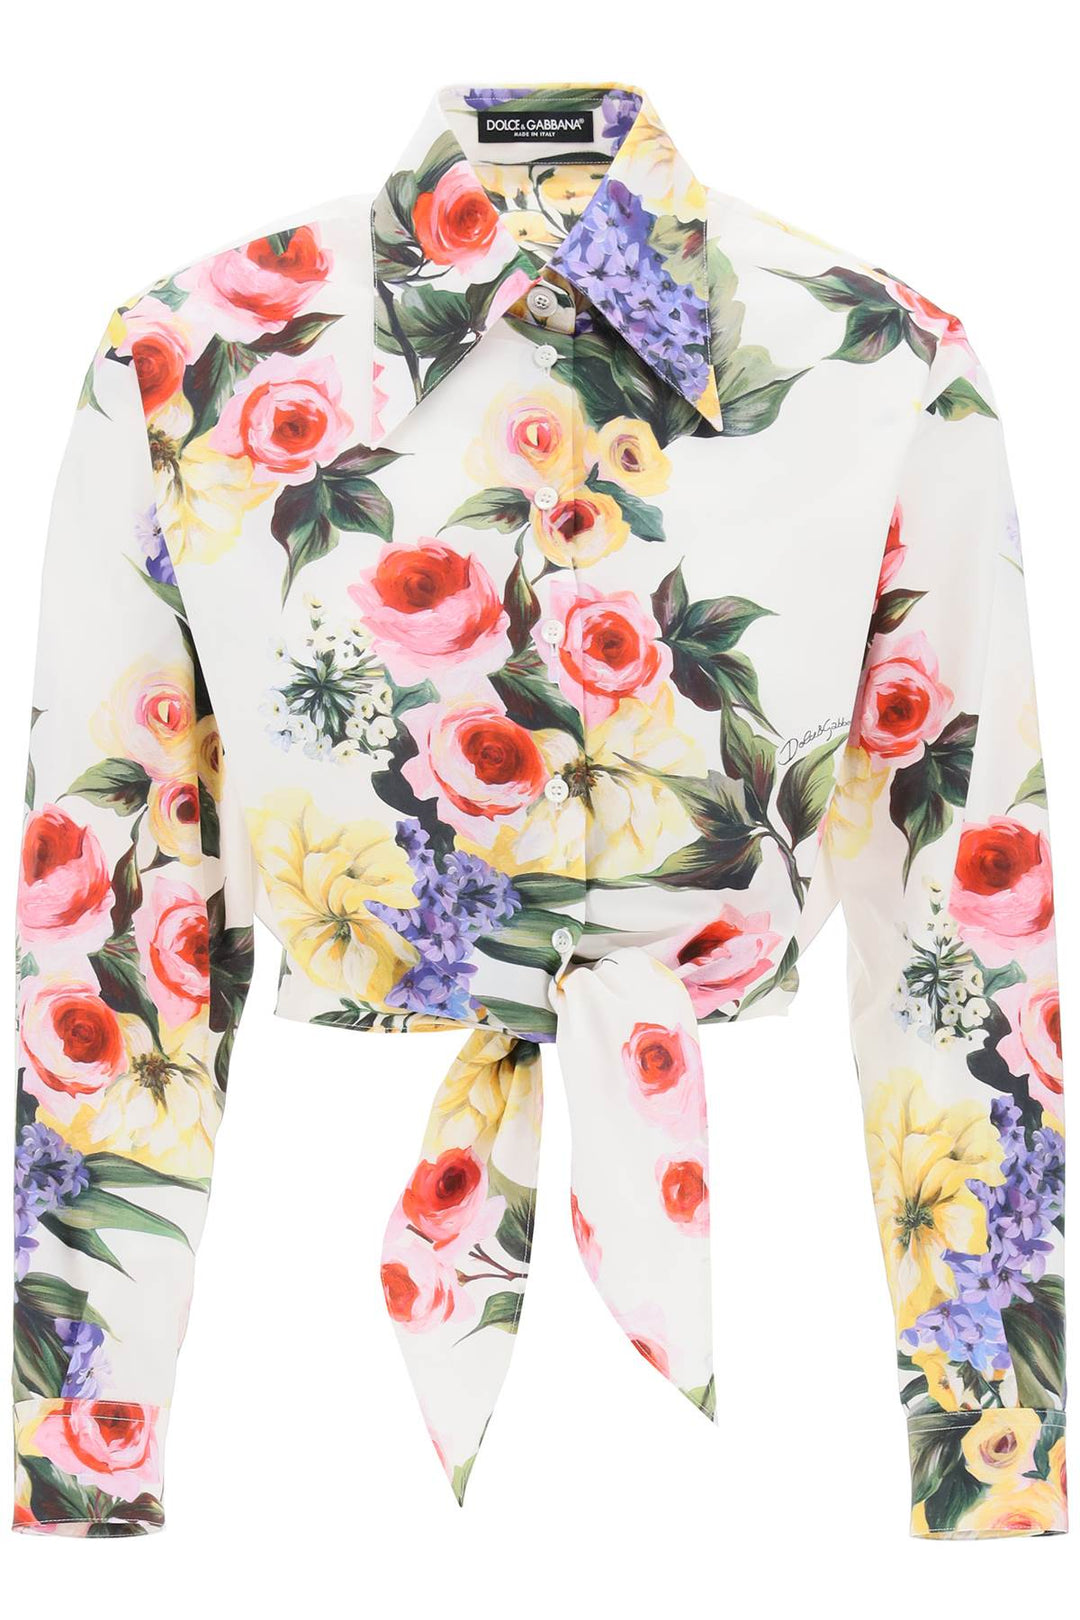 Dolce & Gabbana Rose Garden Cropped Shirt   White